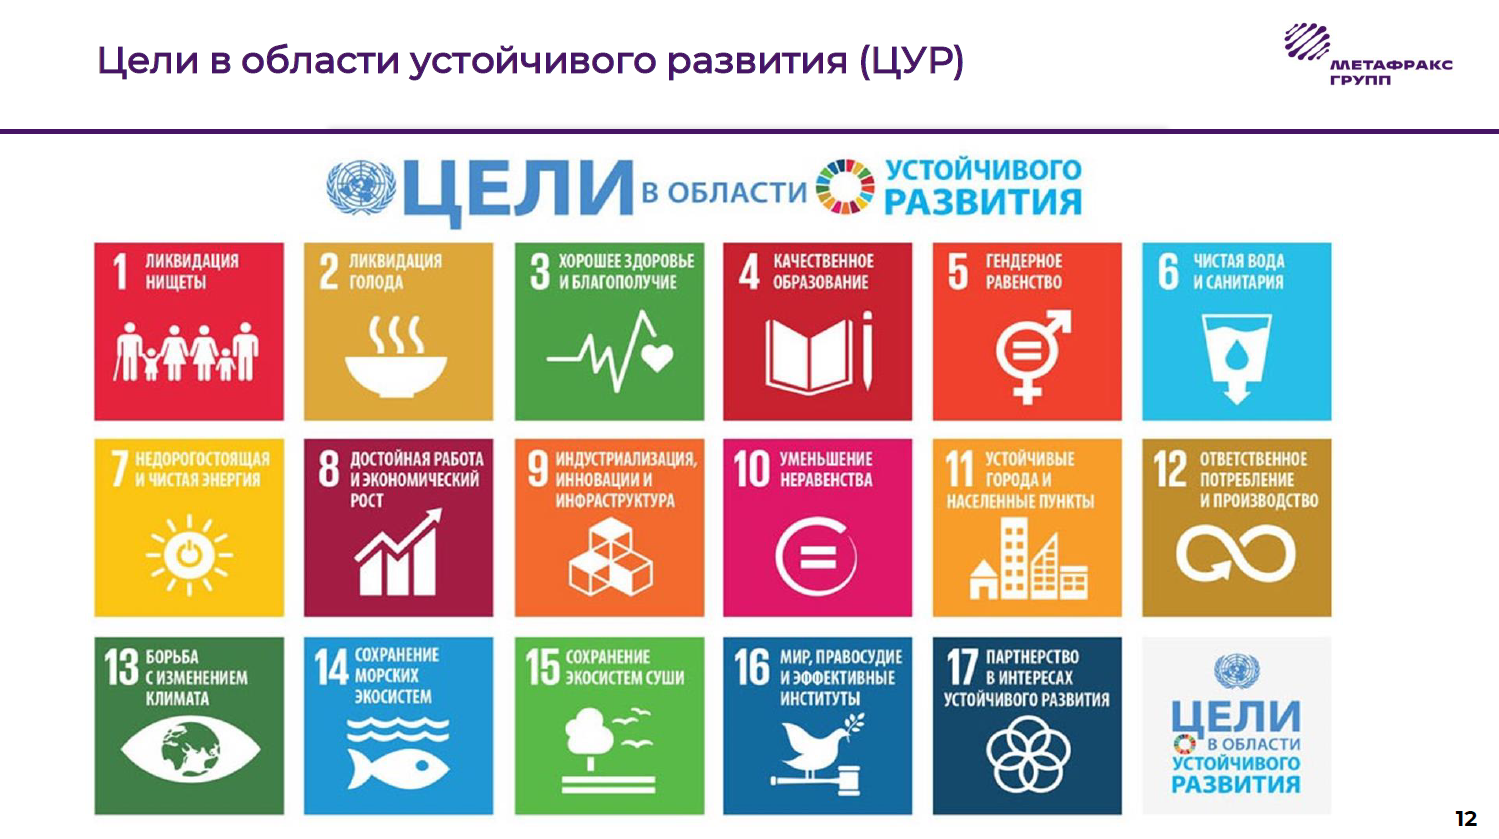 Целей оон в области устойчивого развития. ЦУР цели устойчивого развития. Цели устойчивого развития ООН 2030. Цели устойчивого развития в регионах. План устойчивого развития.